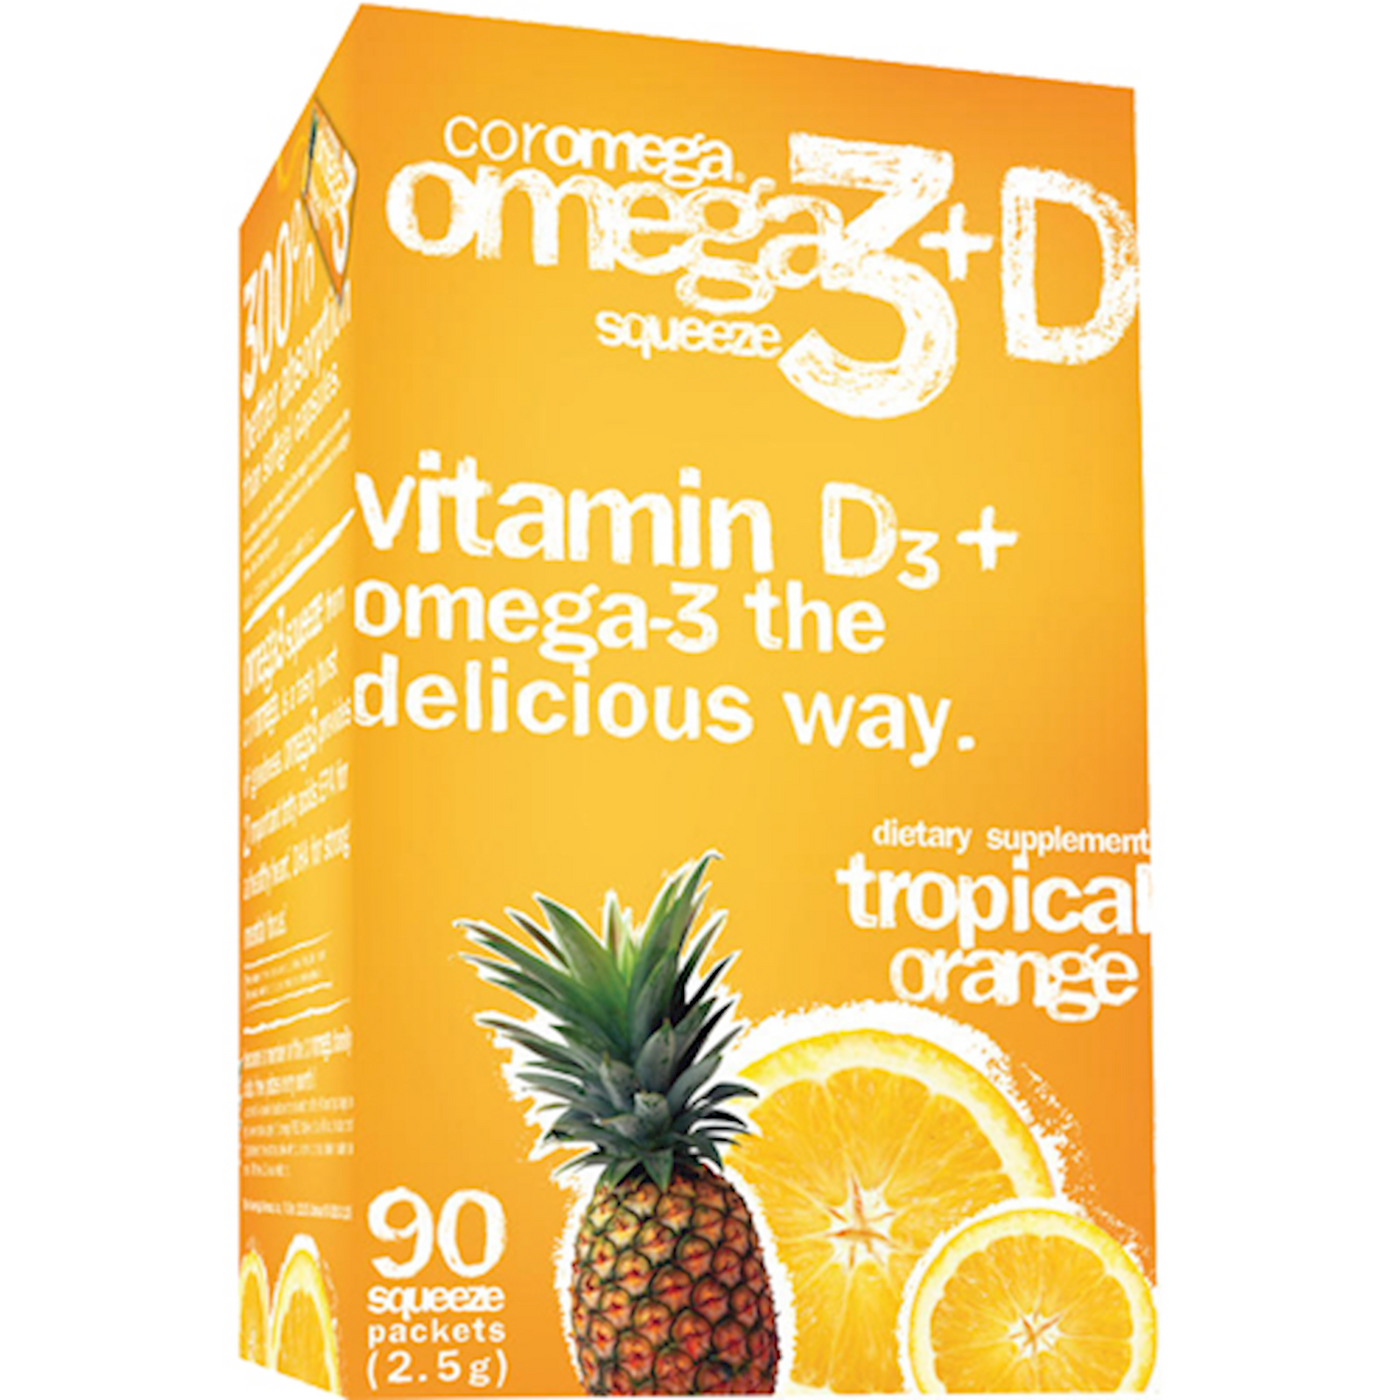 Coromega Tropical Orange + D s Curated Wellness